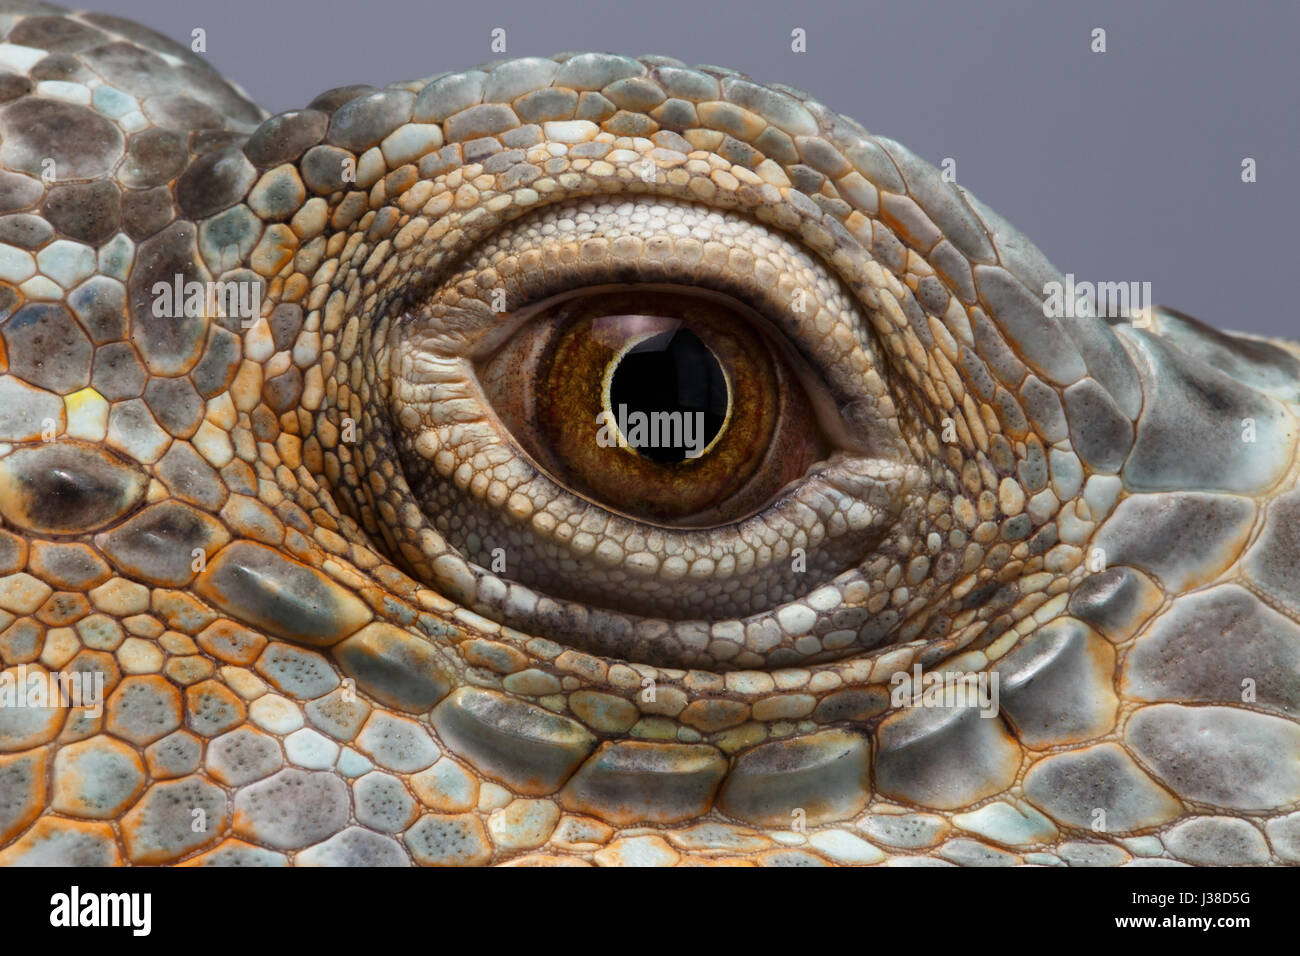 Closeup Eye of Green Iguana Stock Photo